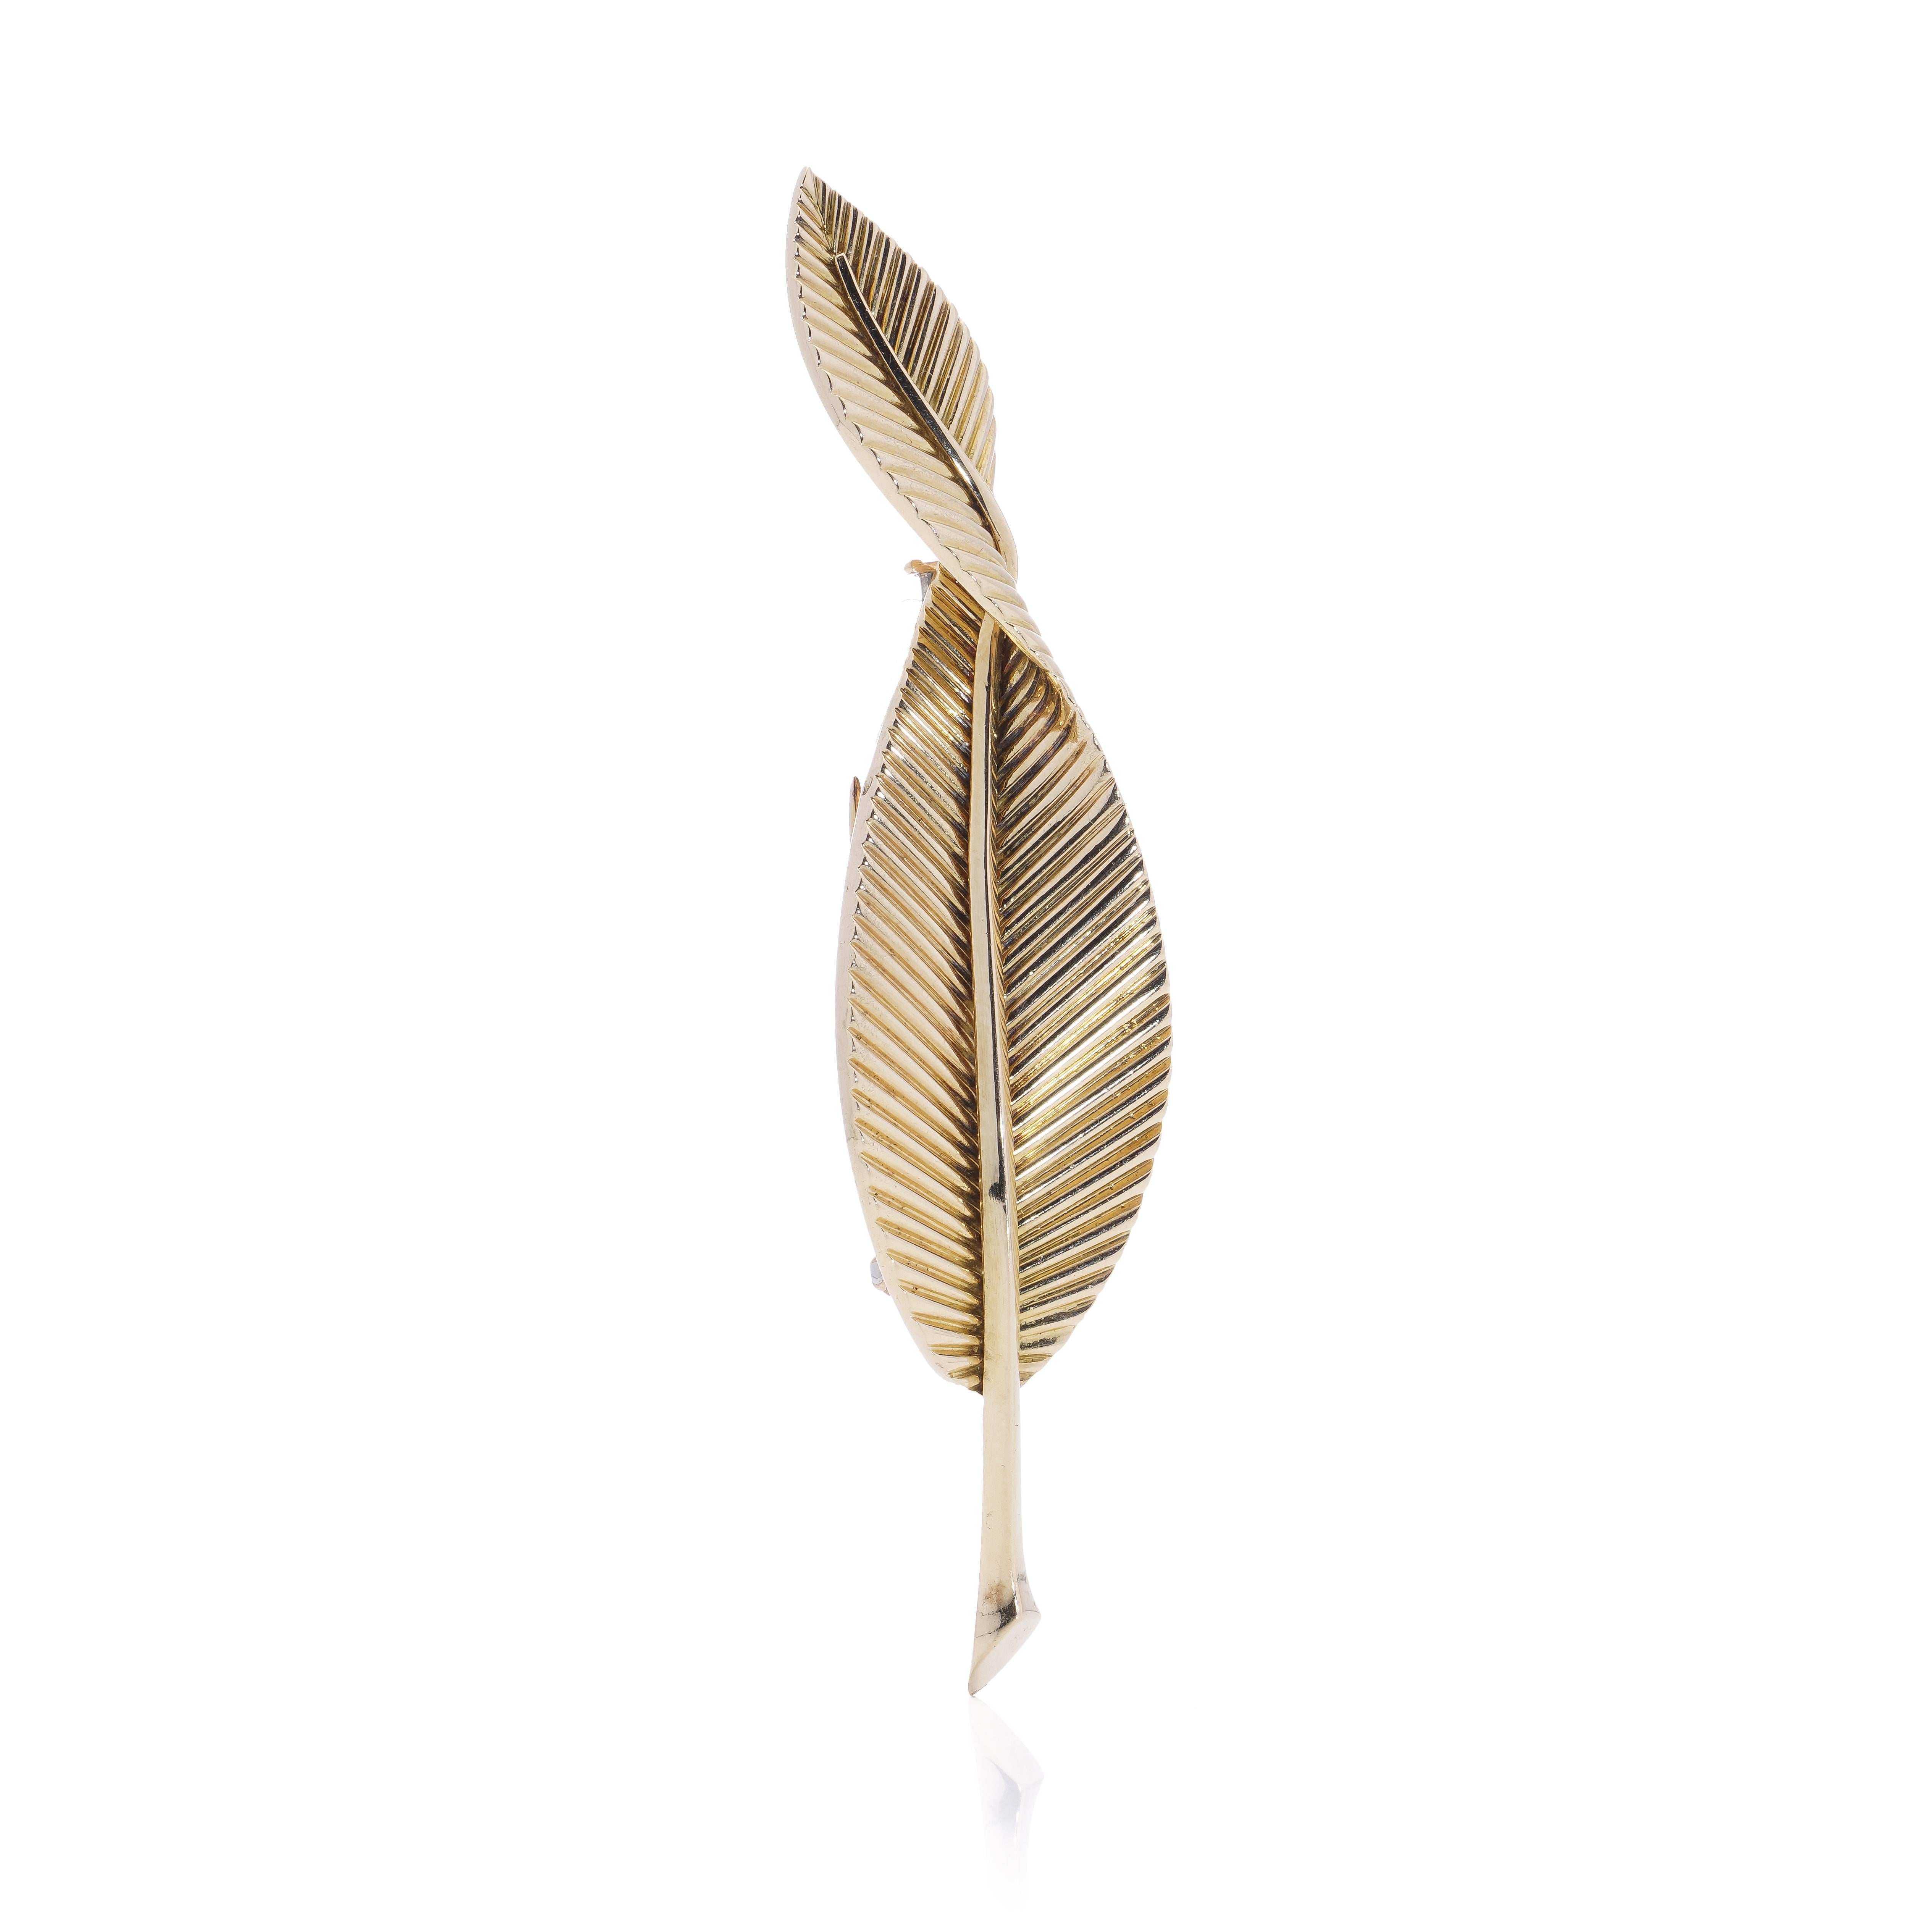 Van Cleef & Arpels vintage  18kt. yellow gold Leaf brooch.
Designer : Van Cleef & Arpels
Made in France, Circa 1960's
Fully hallmarked. (Van Cleef & Arpels, 750, Serial Number, French Eagle)

Dimensions -
Length x width x depth: 7.9 x 1.9 x 1 cm